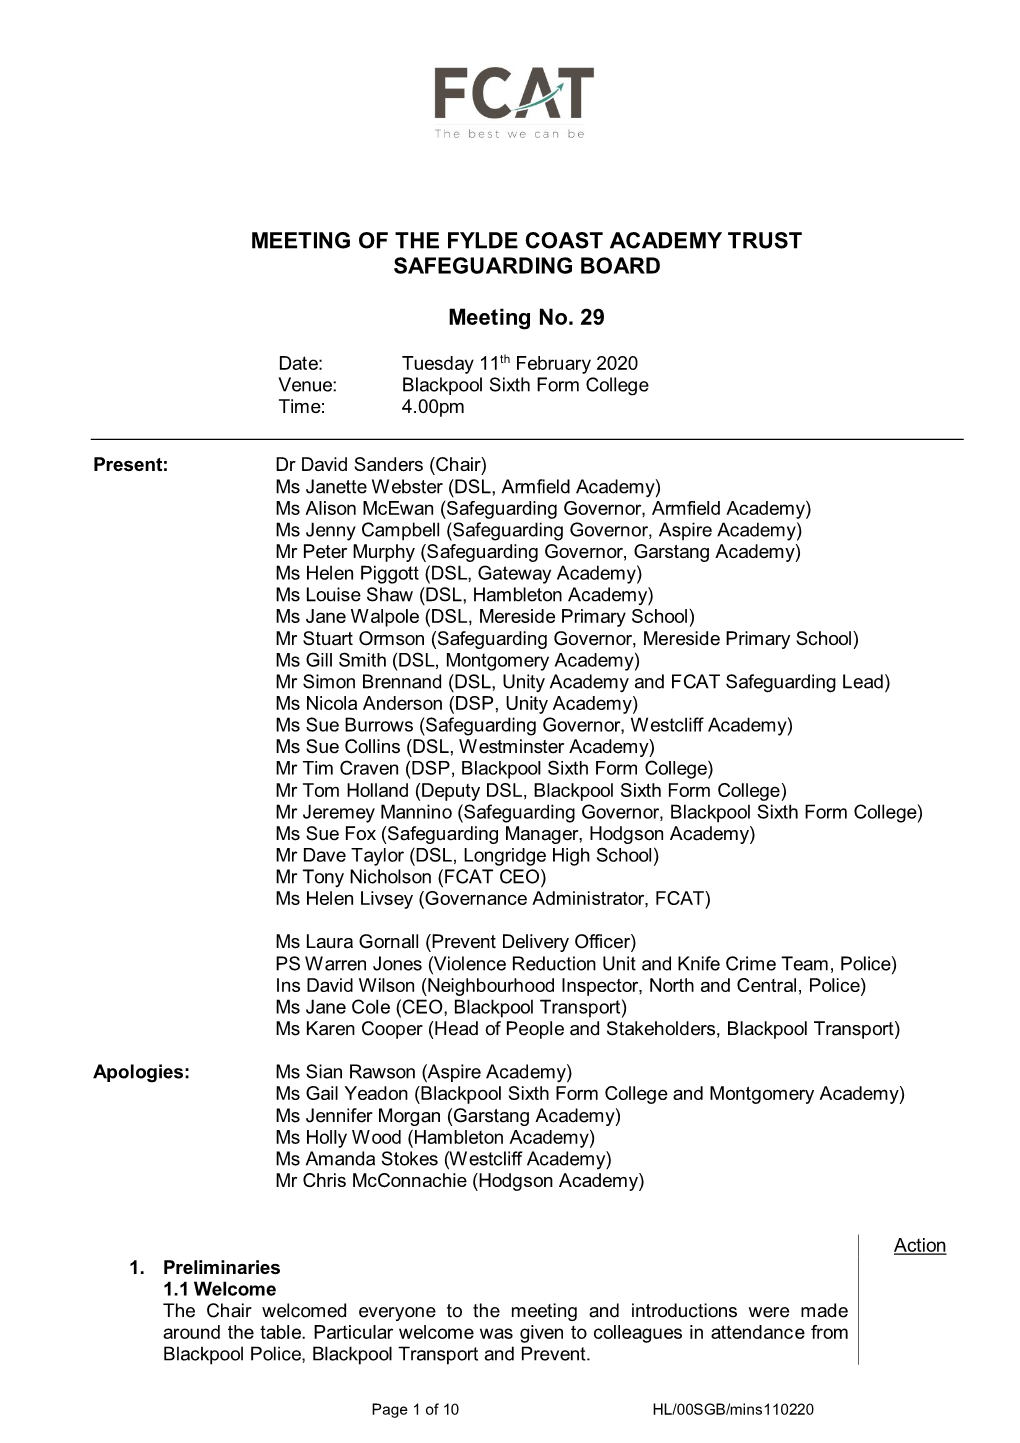 Meeting of the Fylde Coast Academy Trust Safeguarding Board